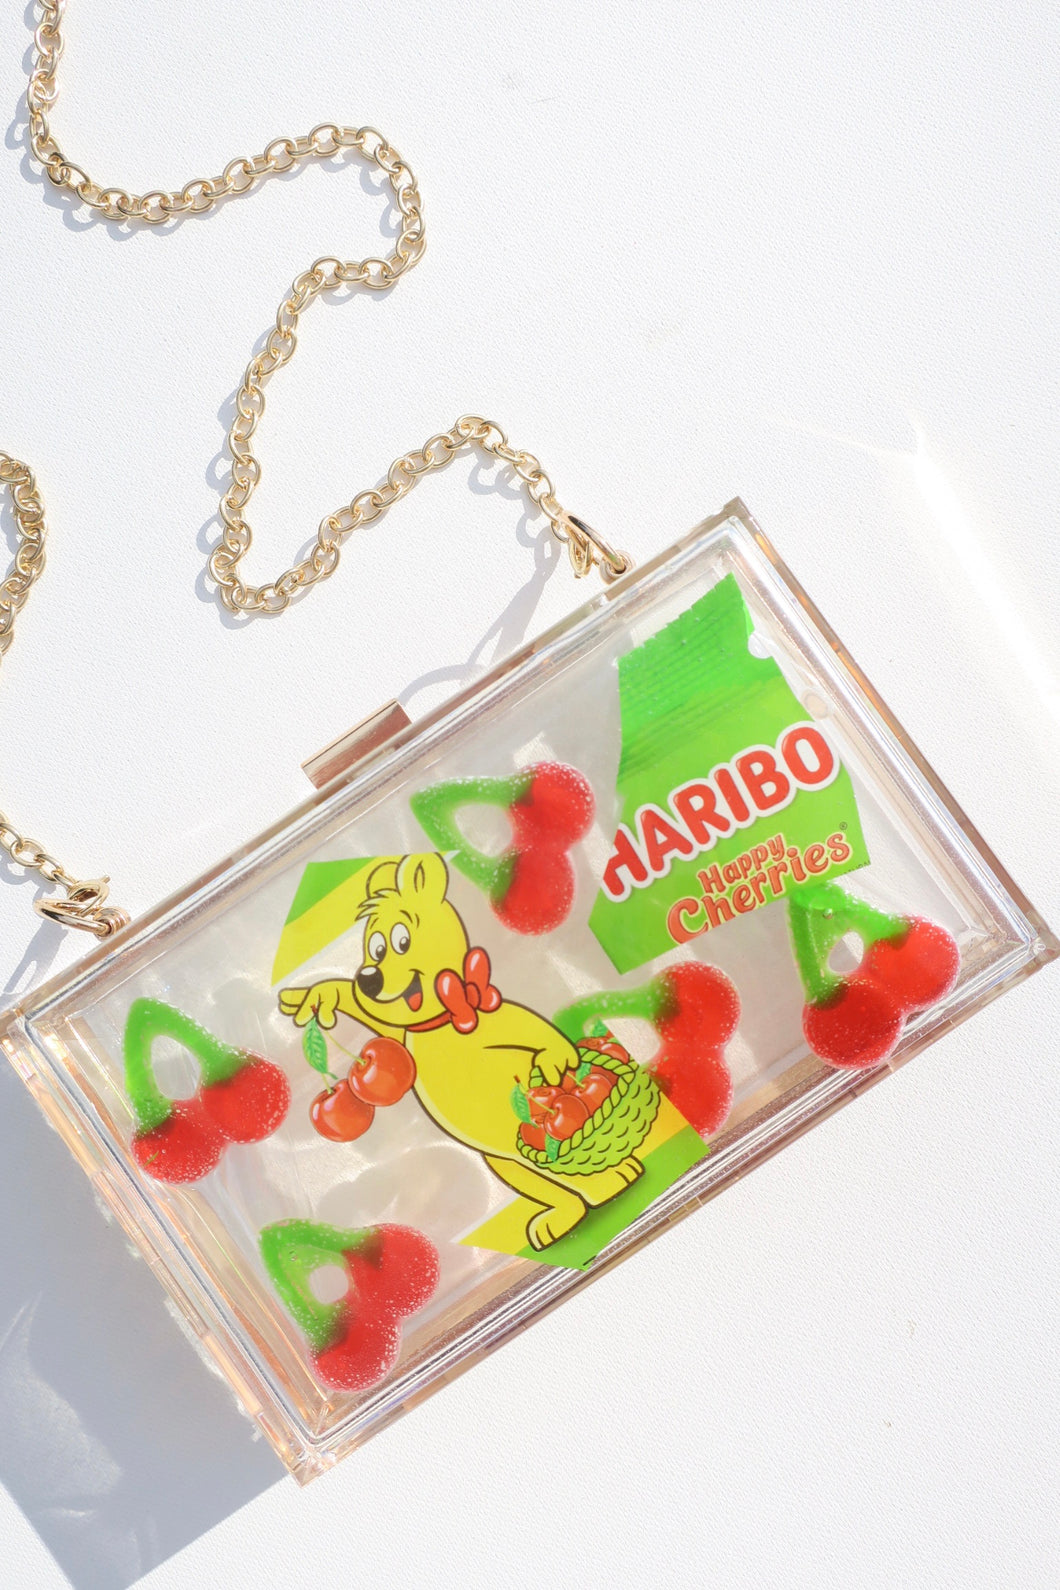 Haribo Cherry Purse